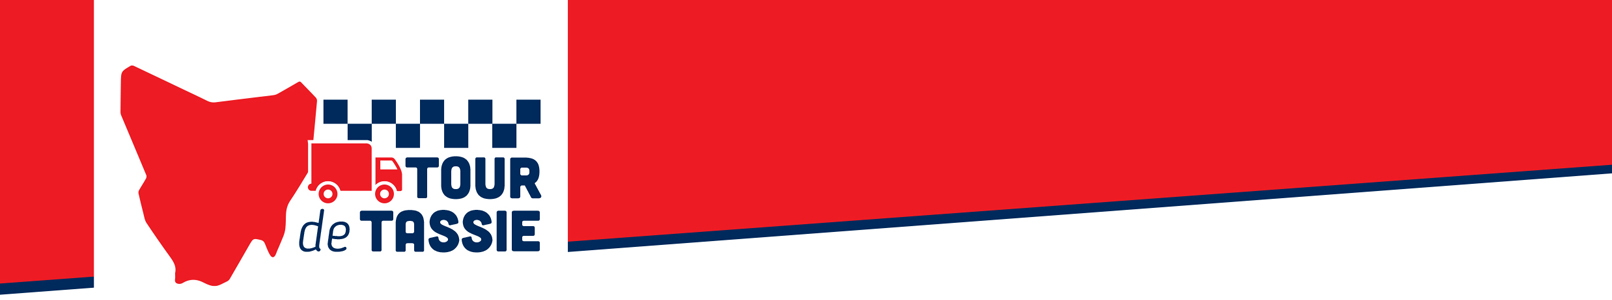 Tour de Tassie logo cover image